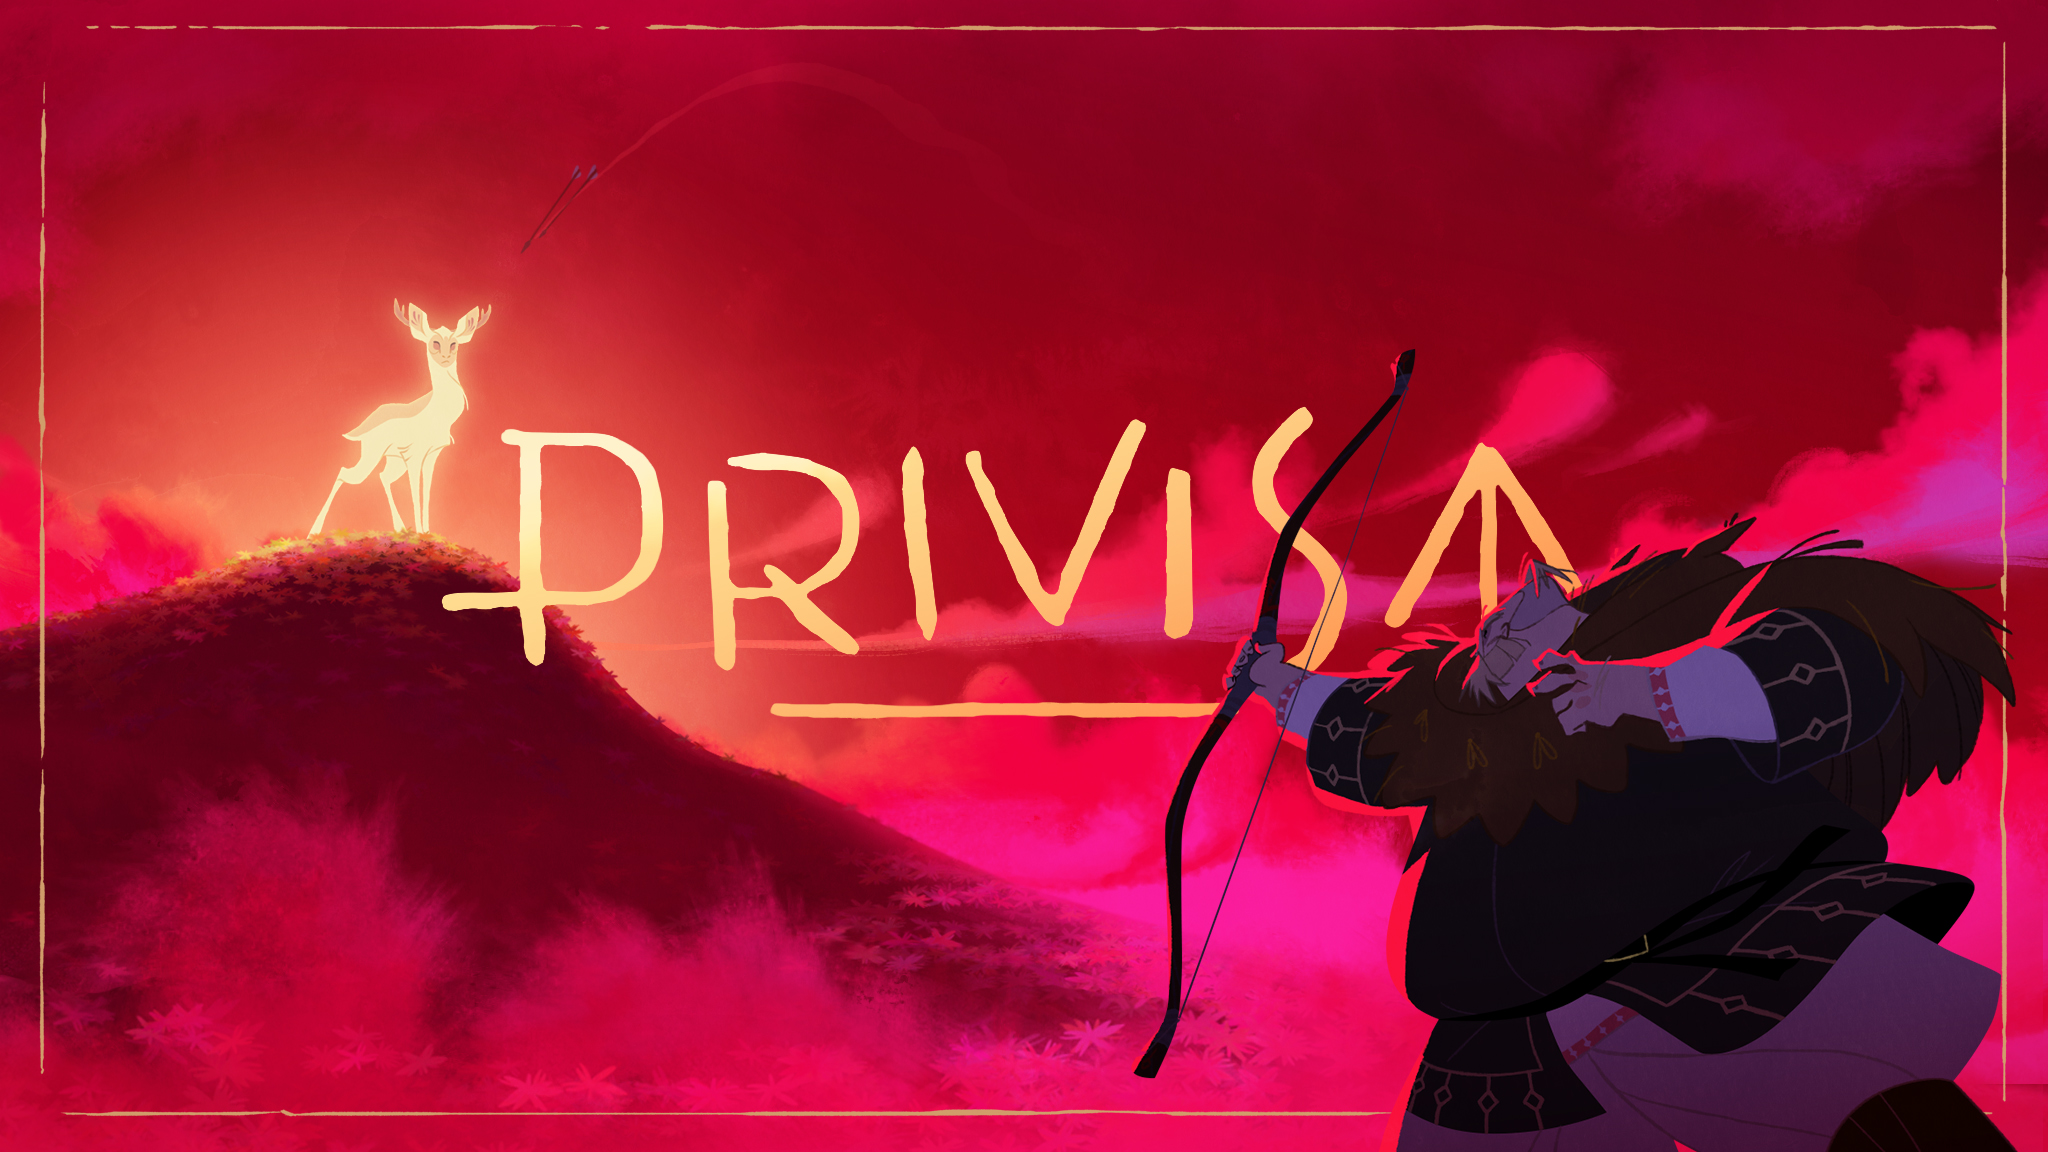 Fine Art: Privisa Is A Beautiful New Animated Film